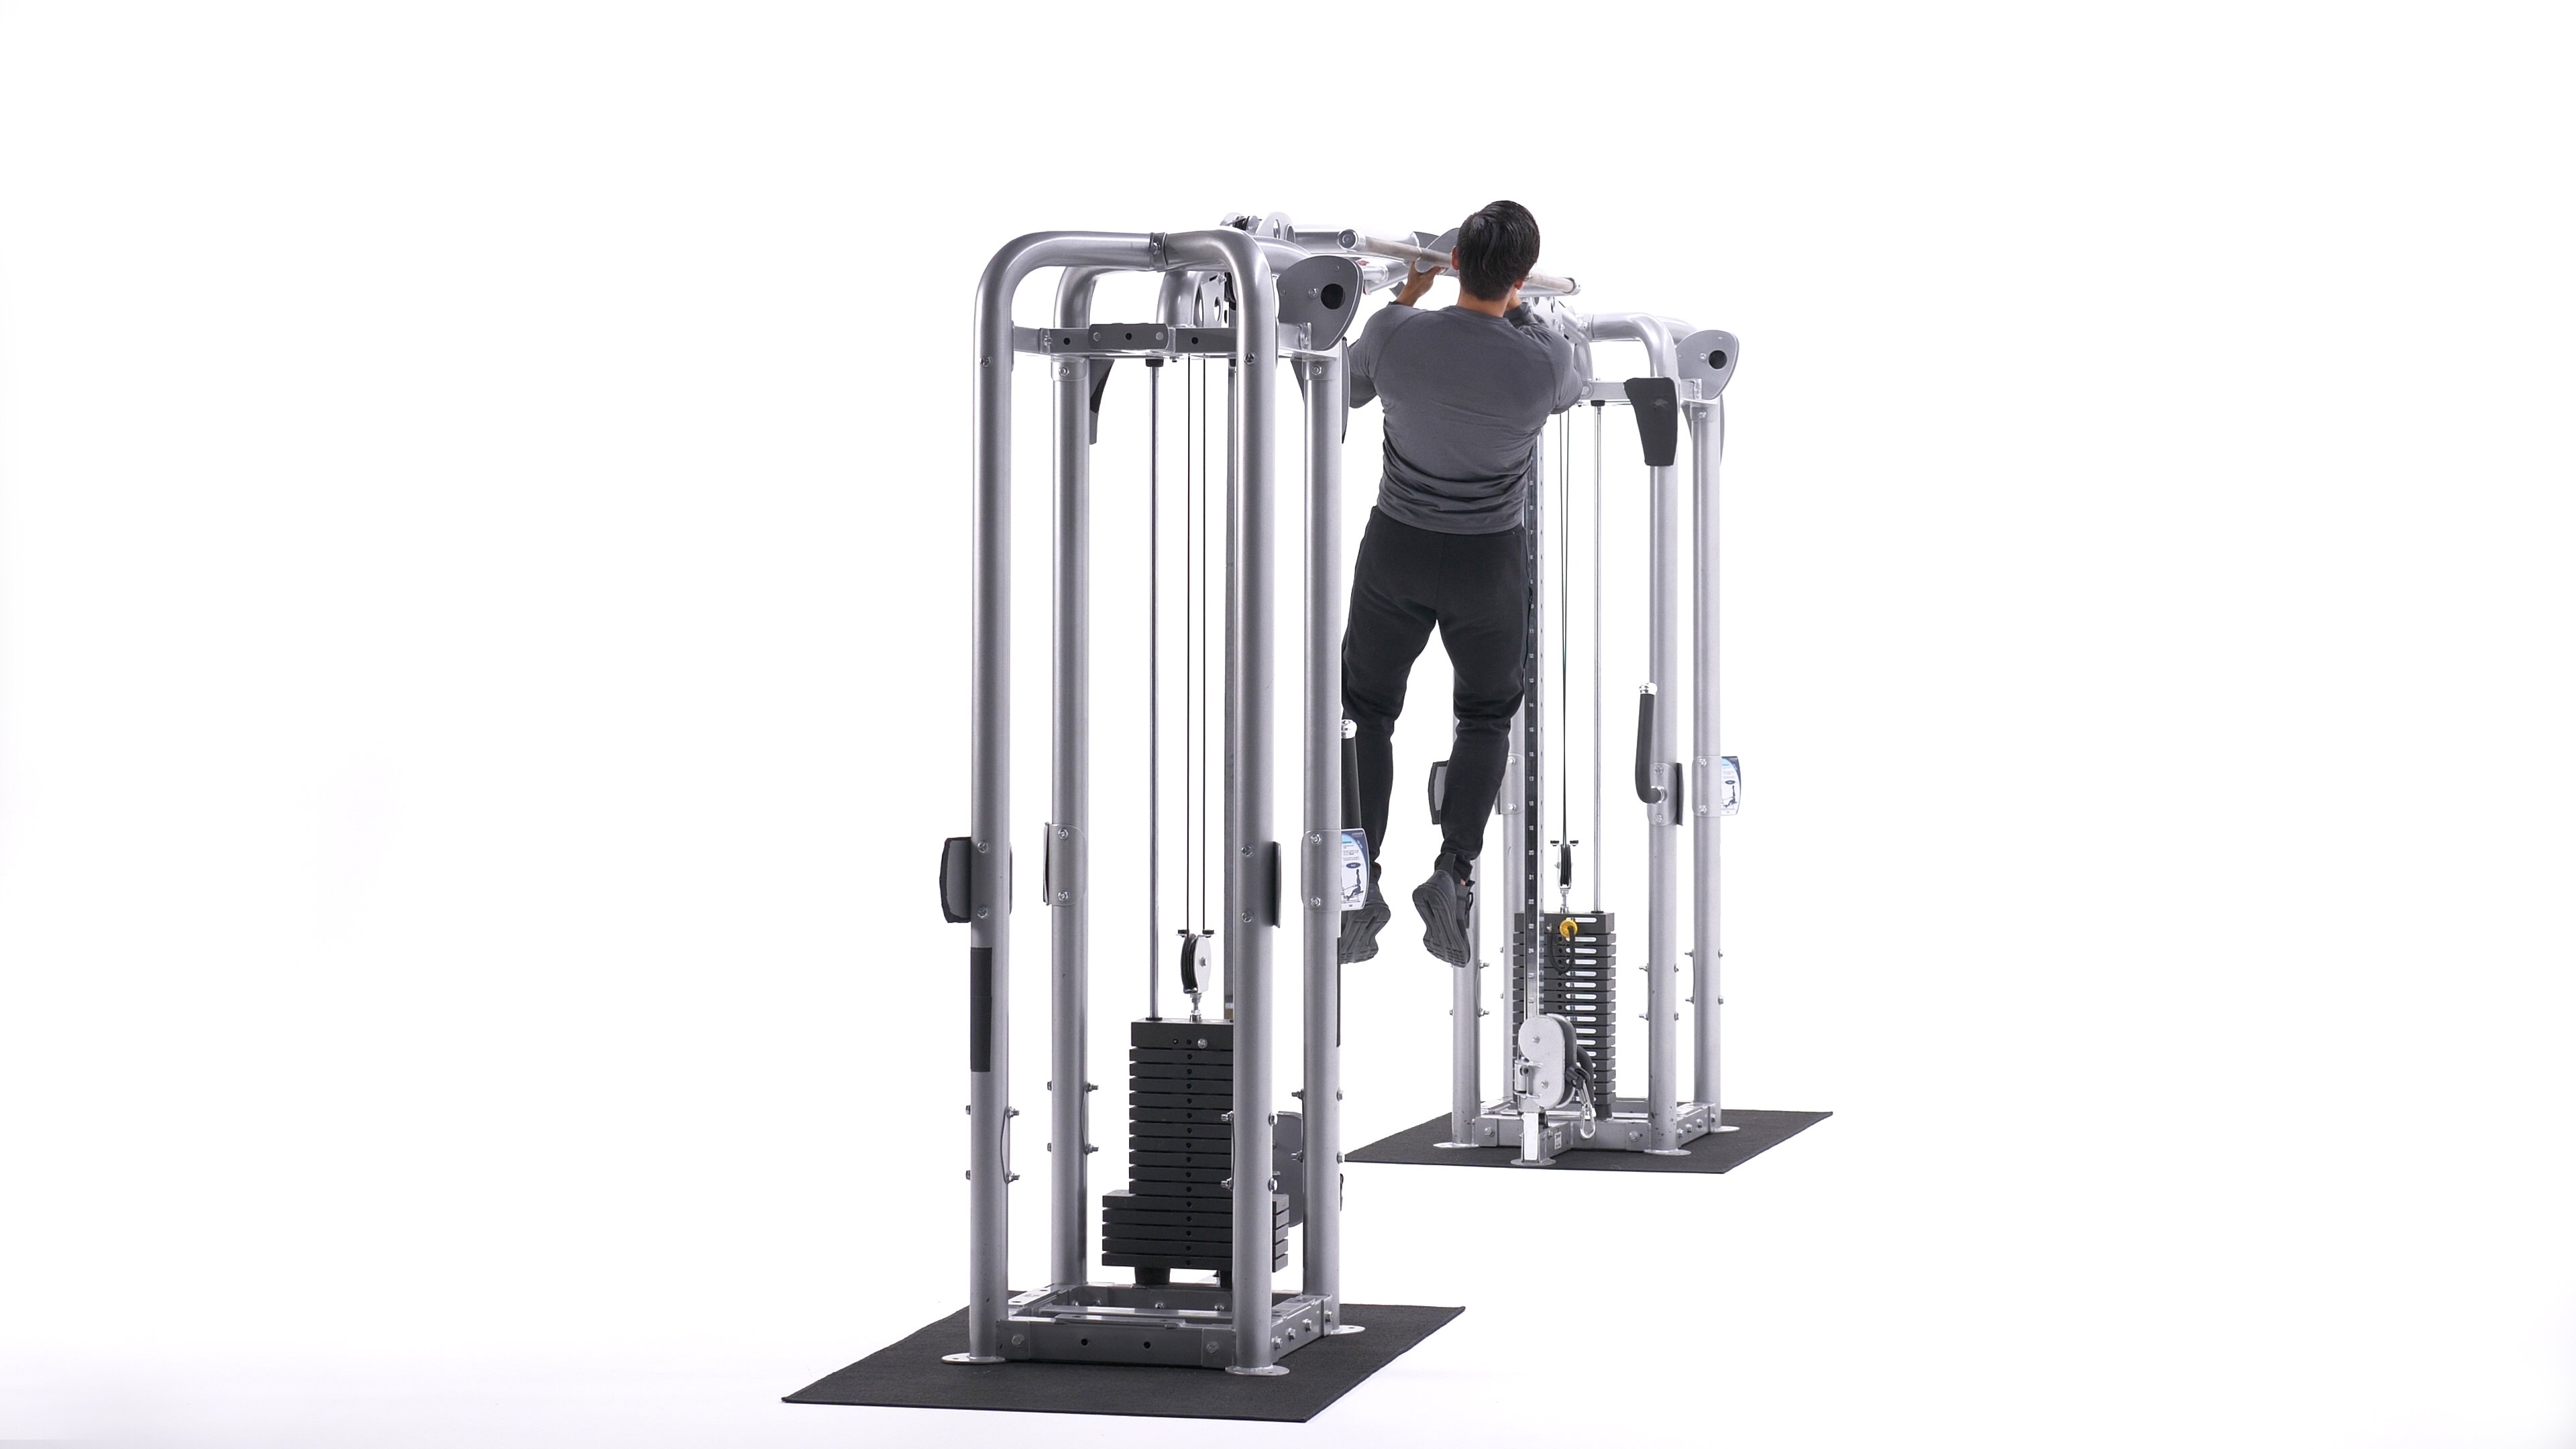 https://www.bodybuilding.com/images/2020/xdb/originals/2020-xdb-140c-v-bar-pull-up-m2.jpg